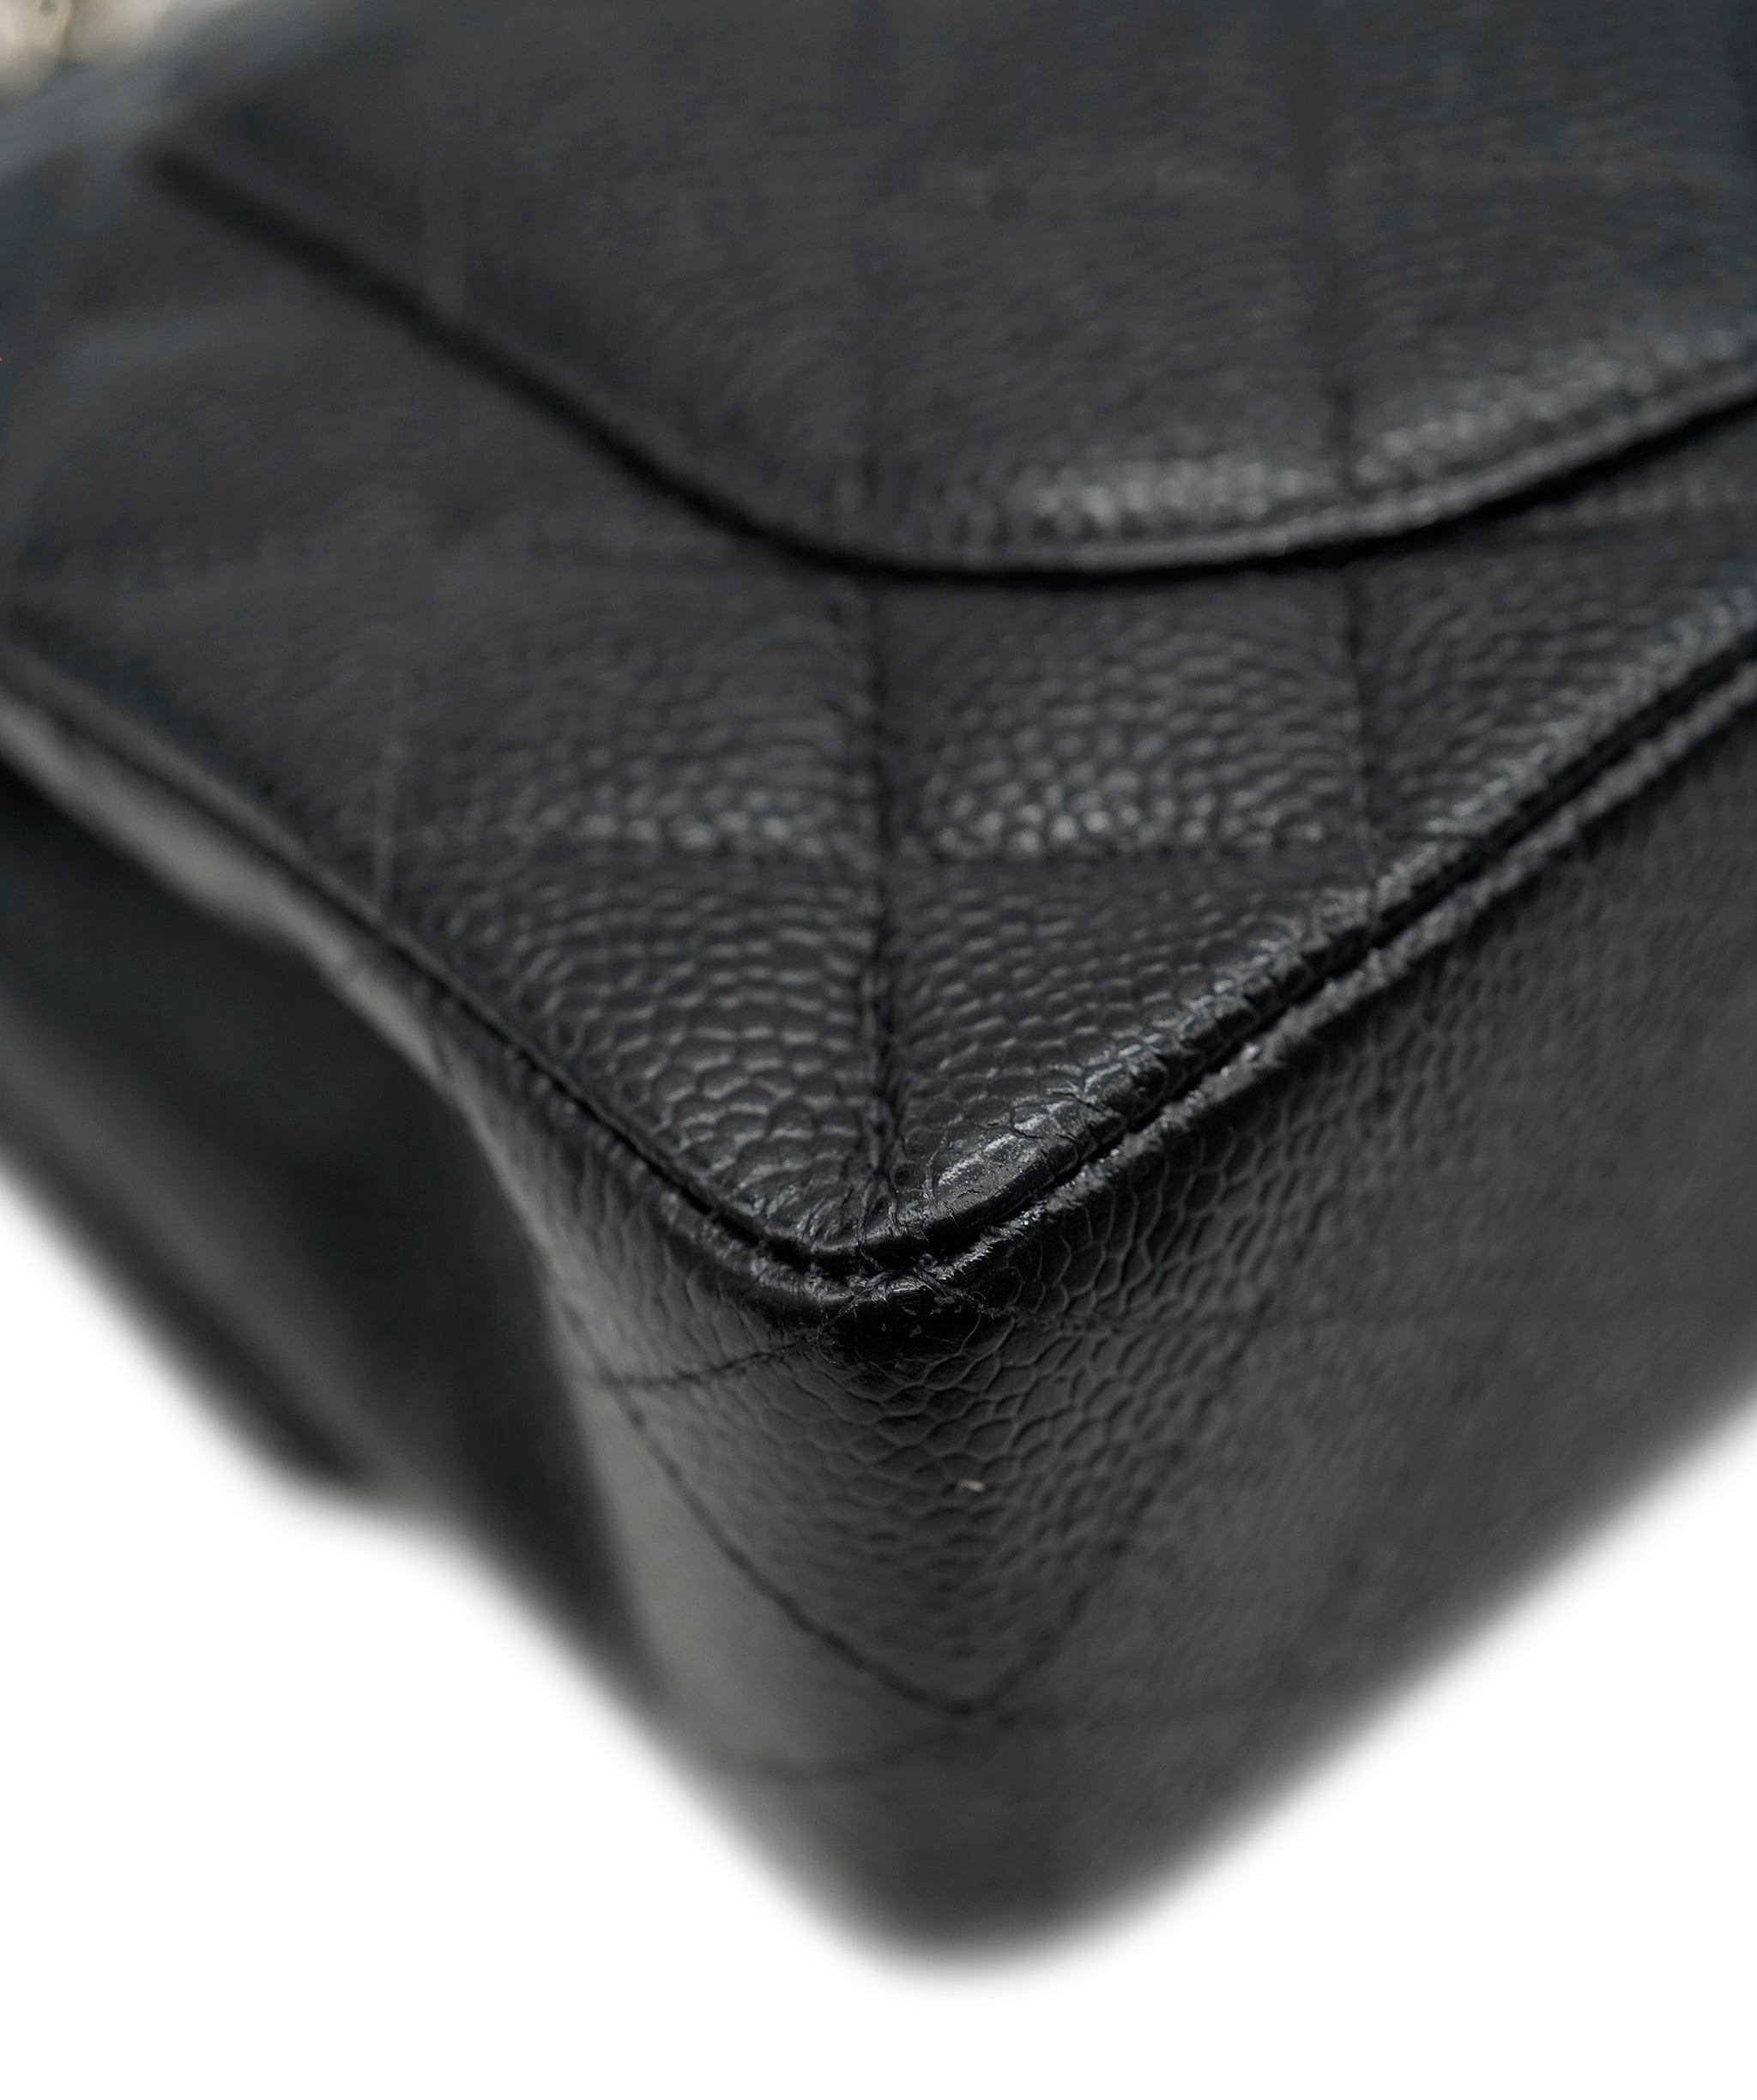 Chanel Chanel Black Caviar Flap Bag  SHW Series 6 ASL10197